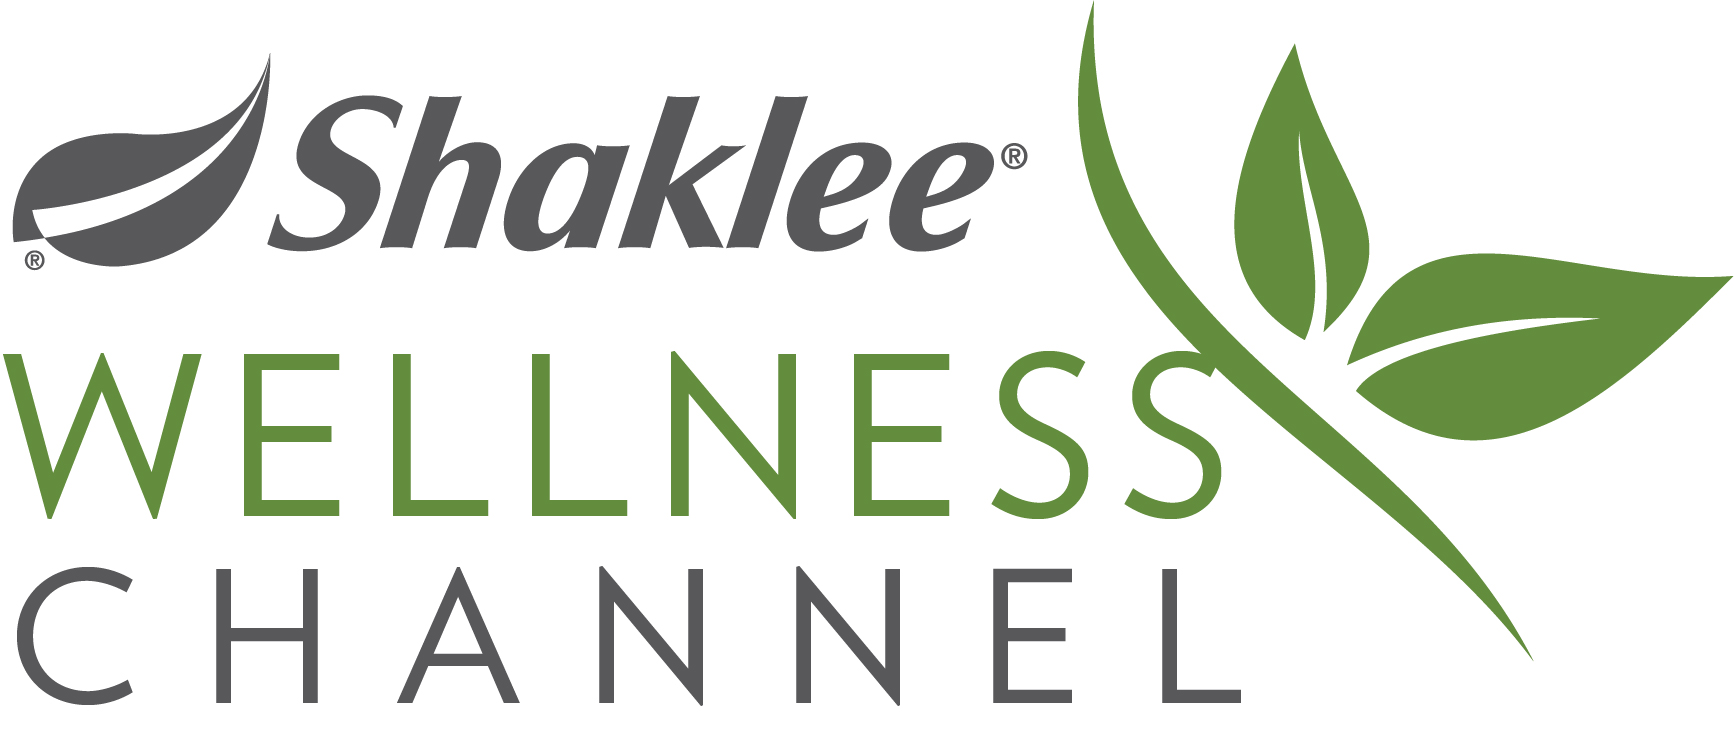 Shaklee Wellness Channel